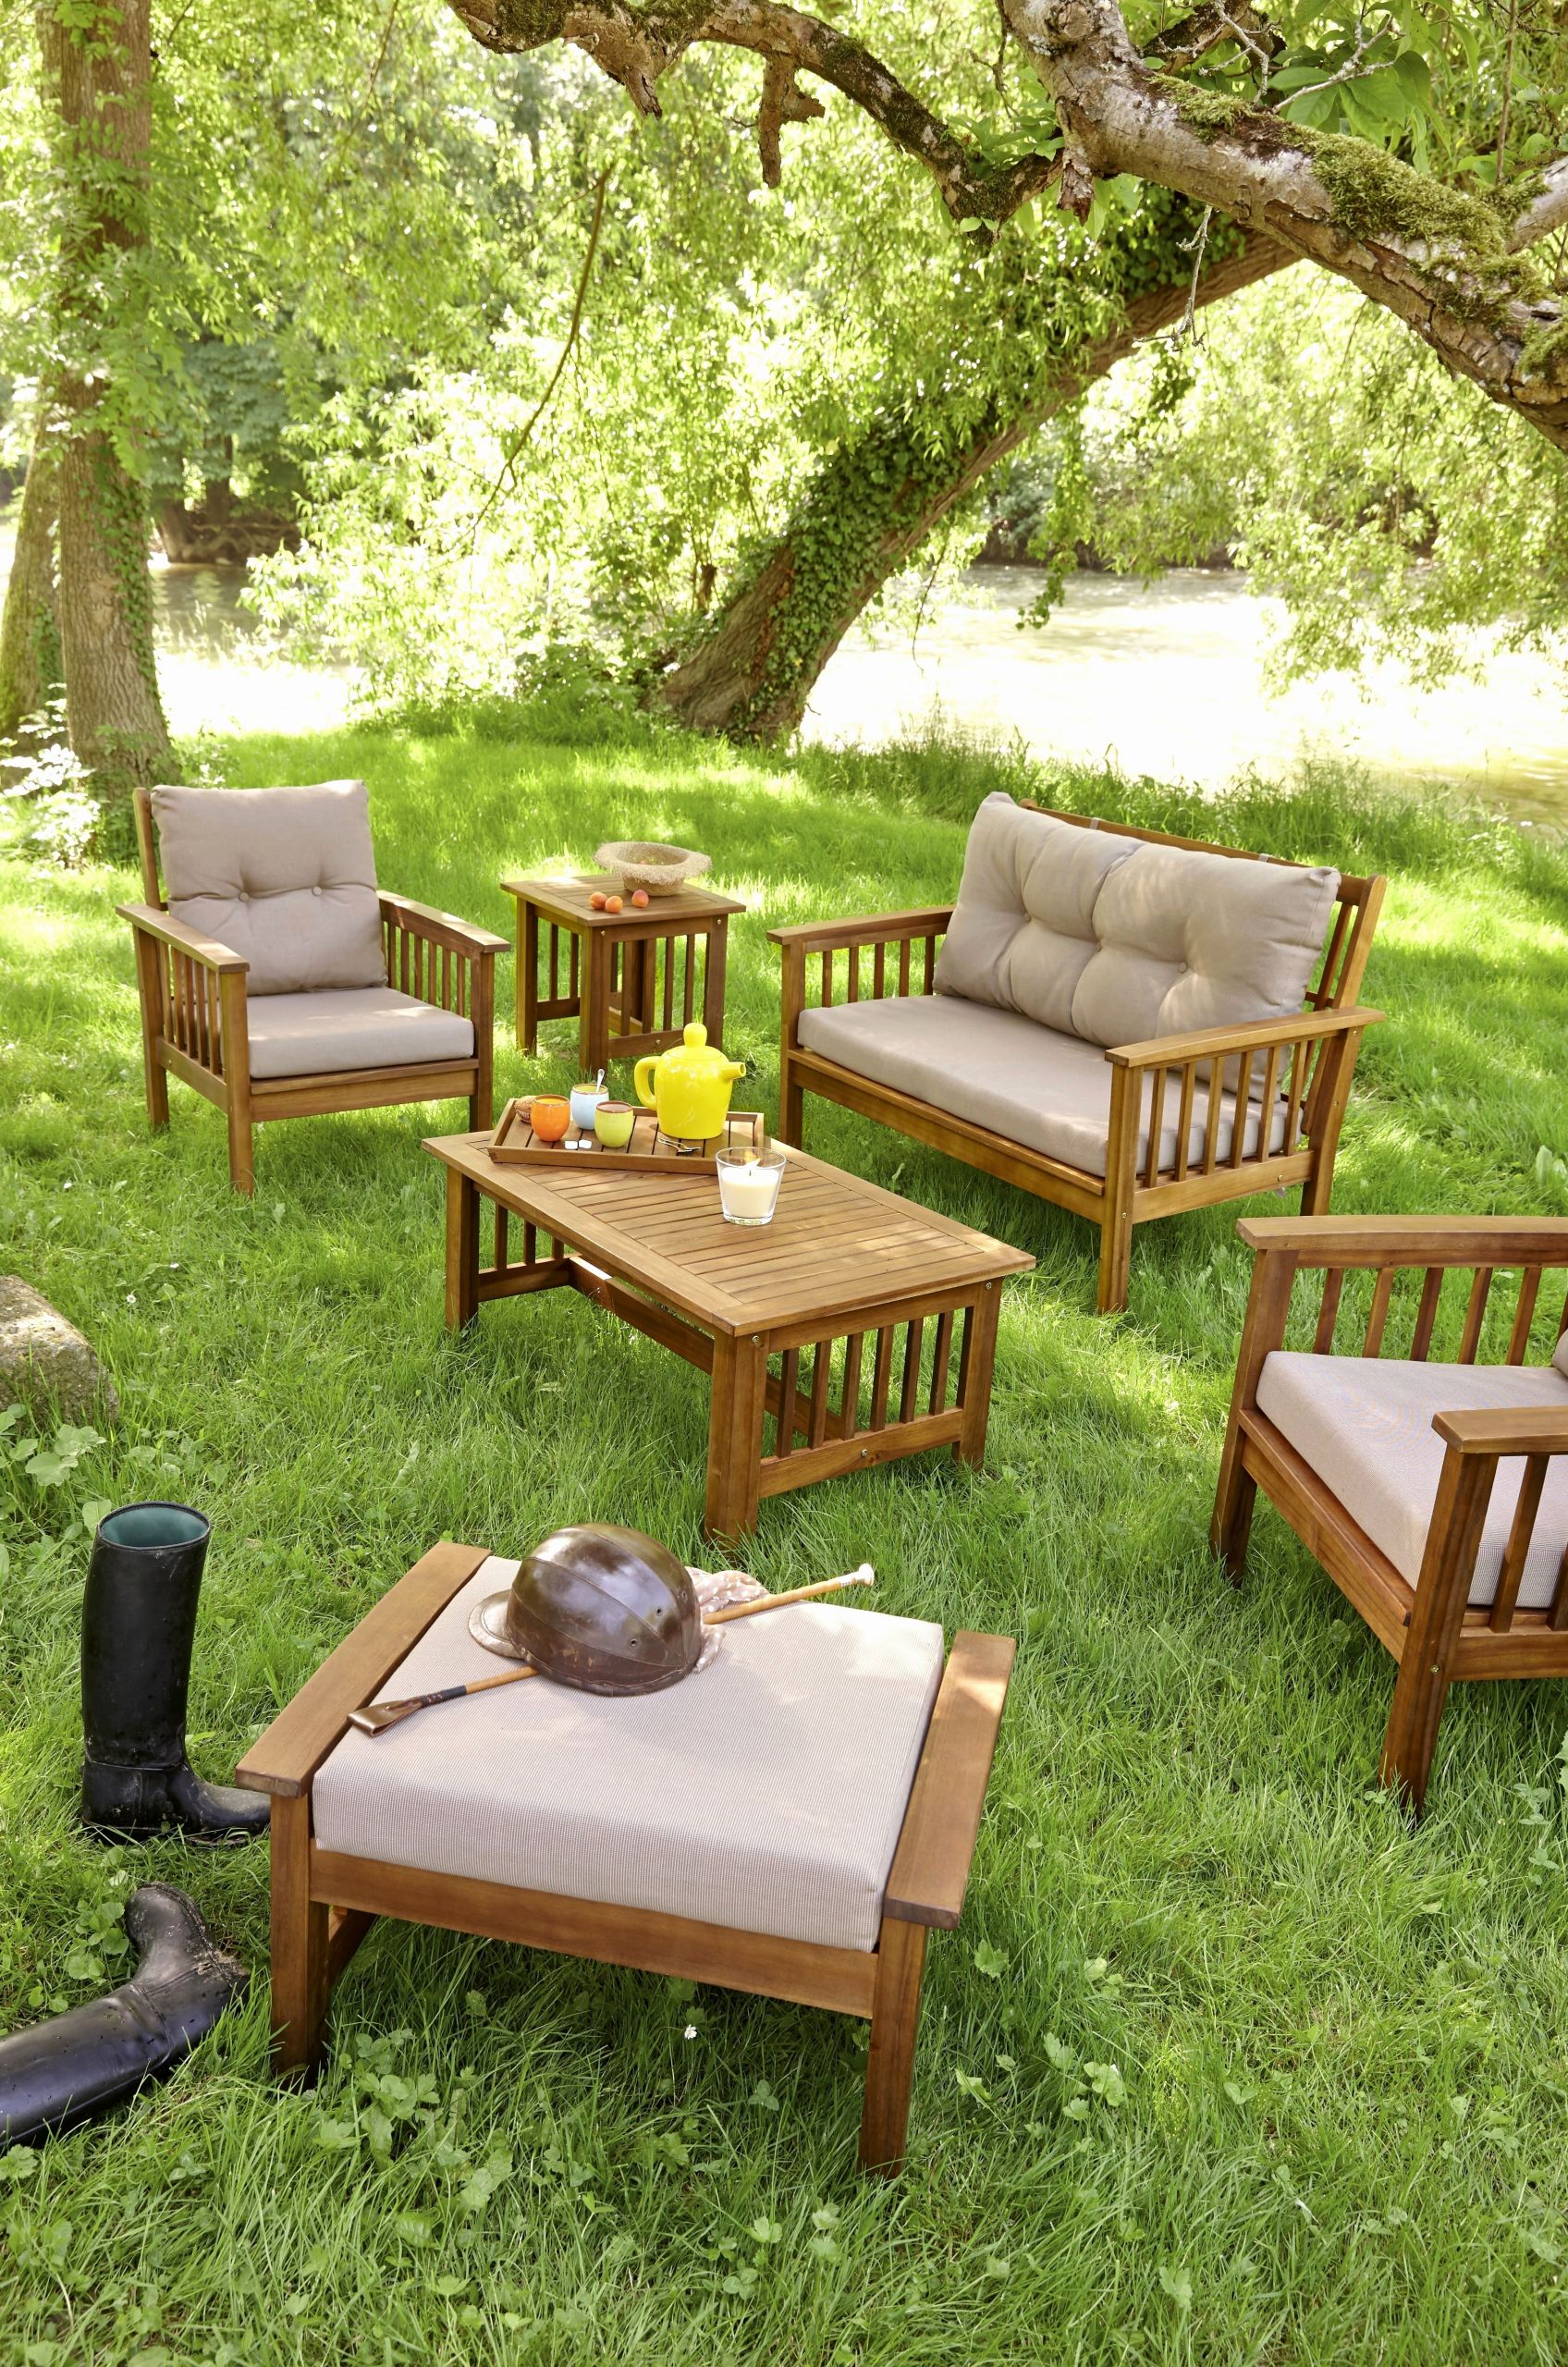 meuble de jardin en bois beau salon de jardin en teck inspirational banc de salon banc jardin bois of meuble de jardin en bois